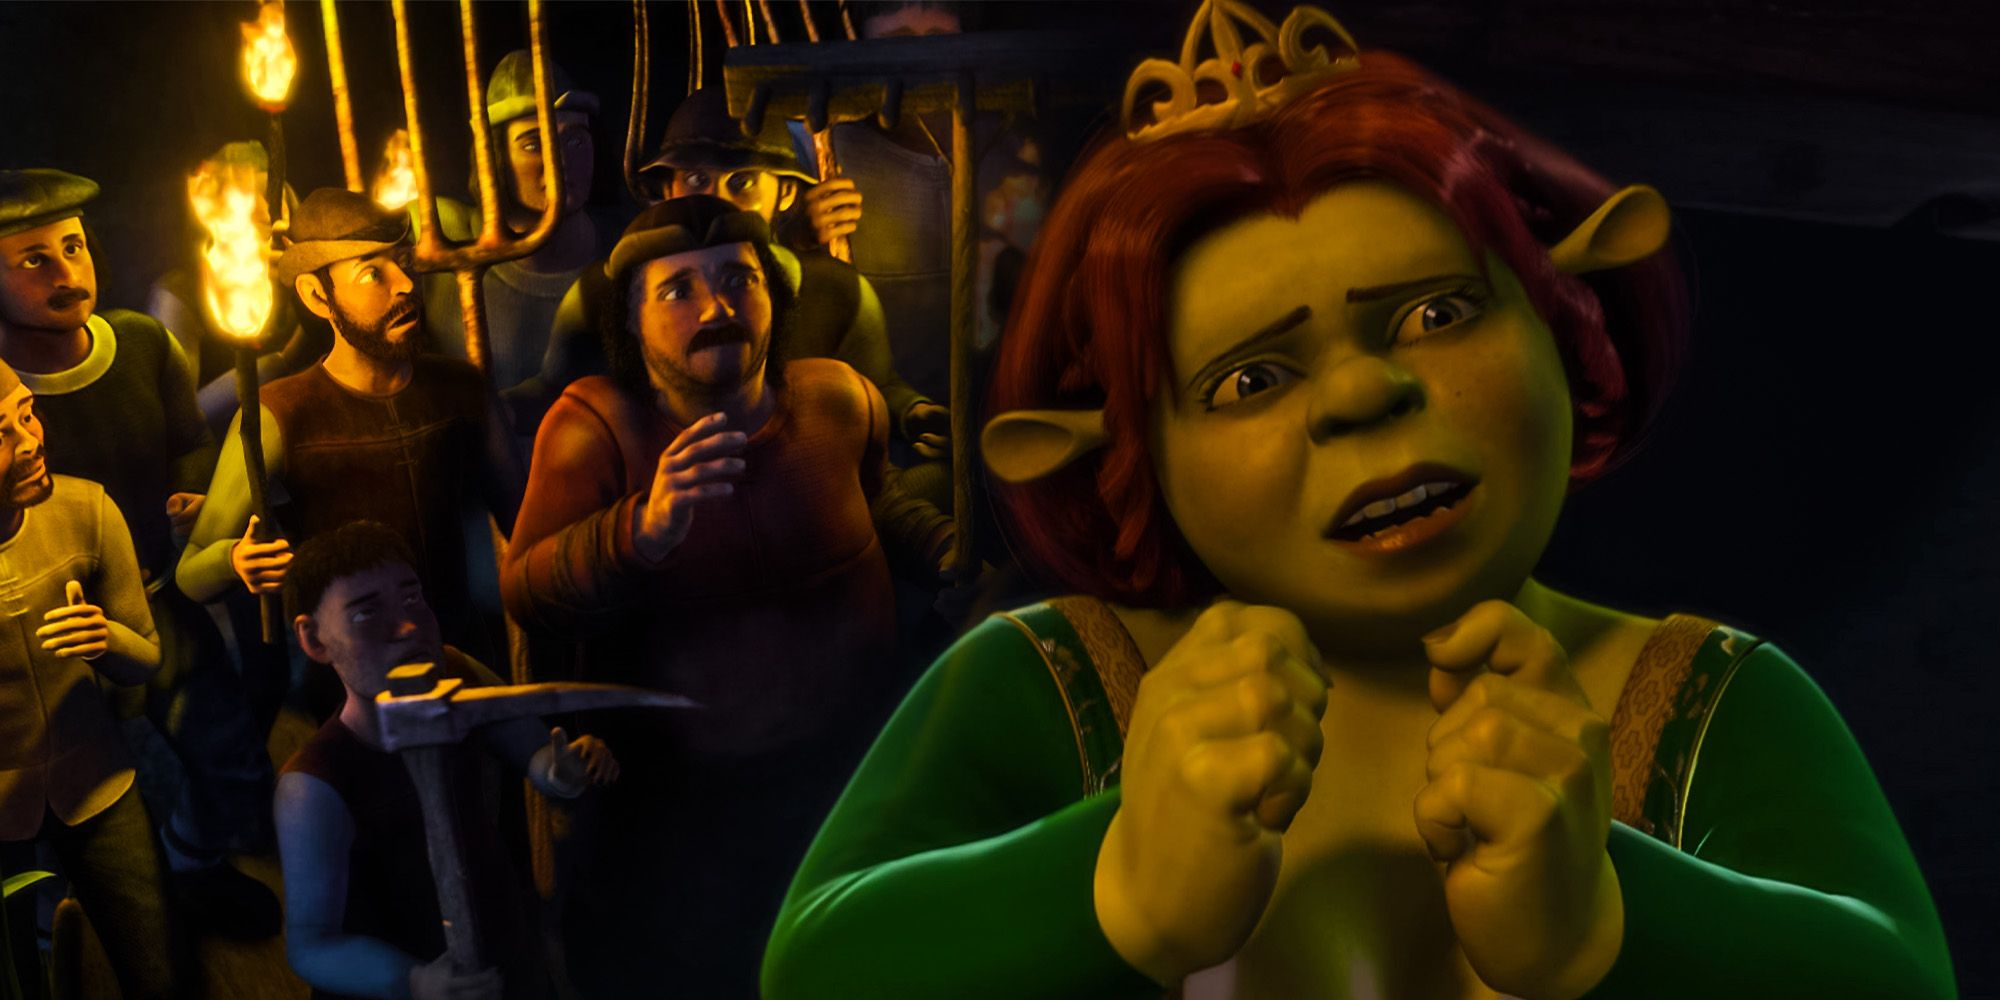 La teoría oscura de Shrek revela que Fiona es un caníbal